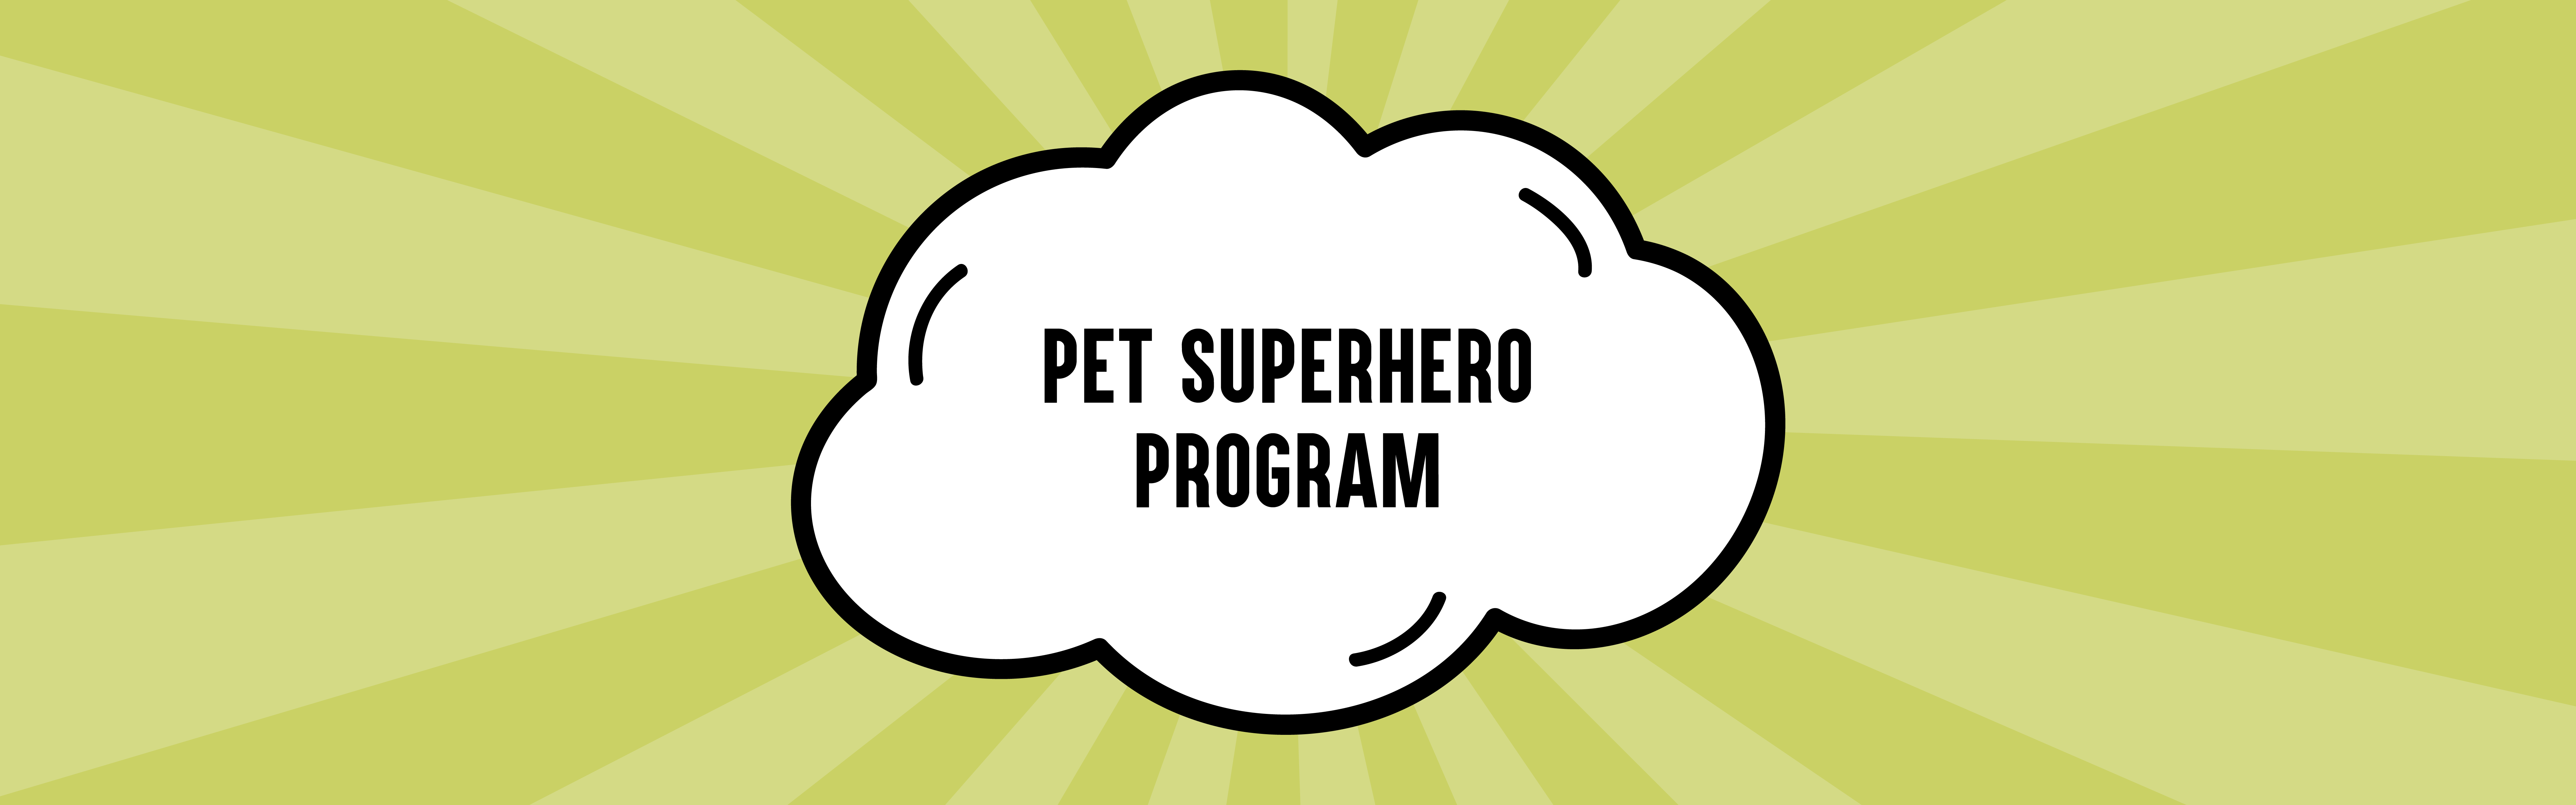 Pet Superhero program banner